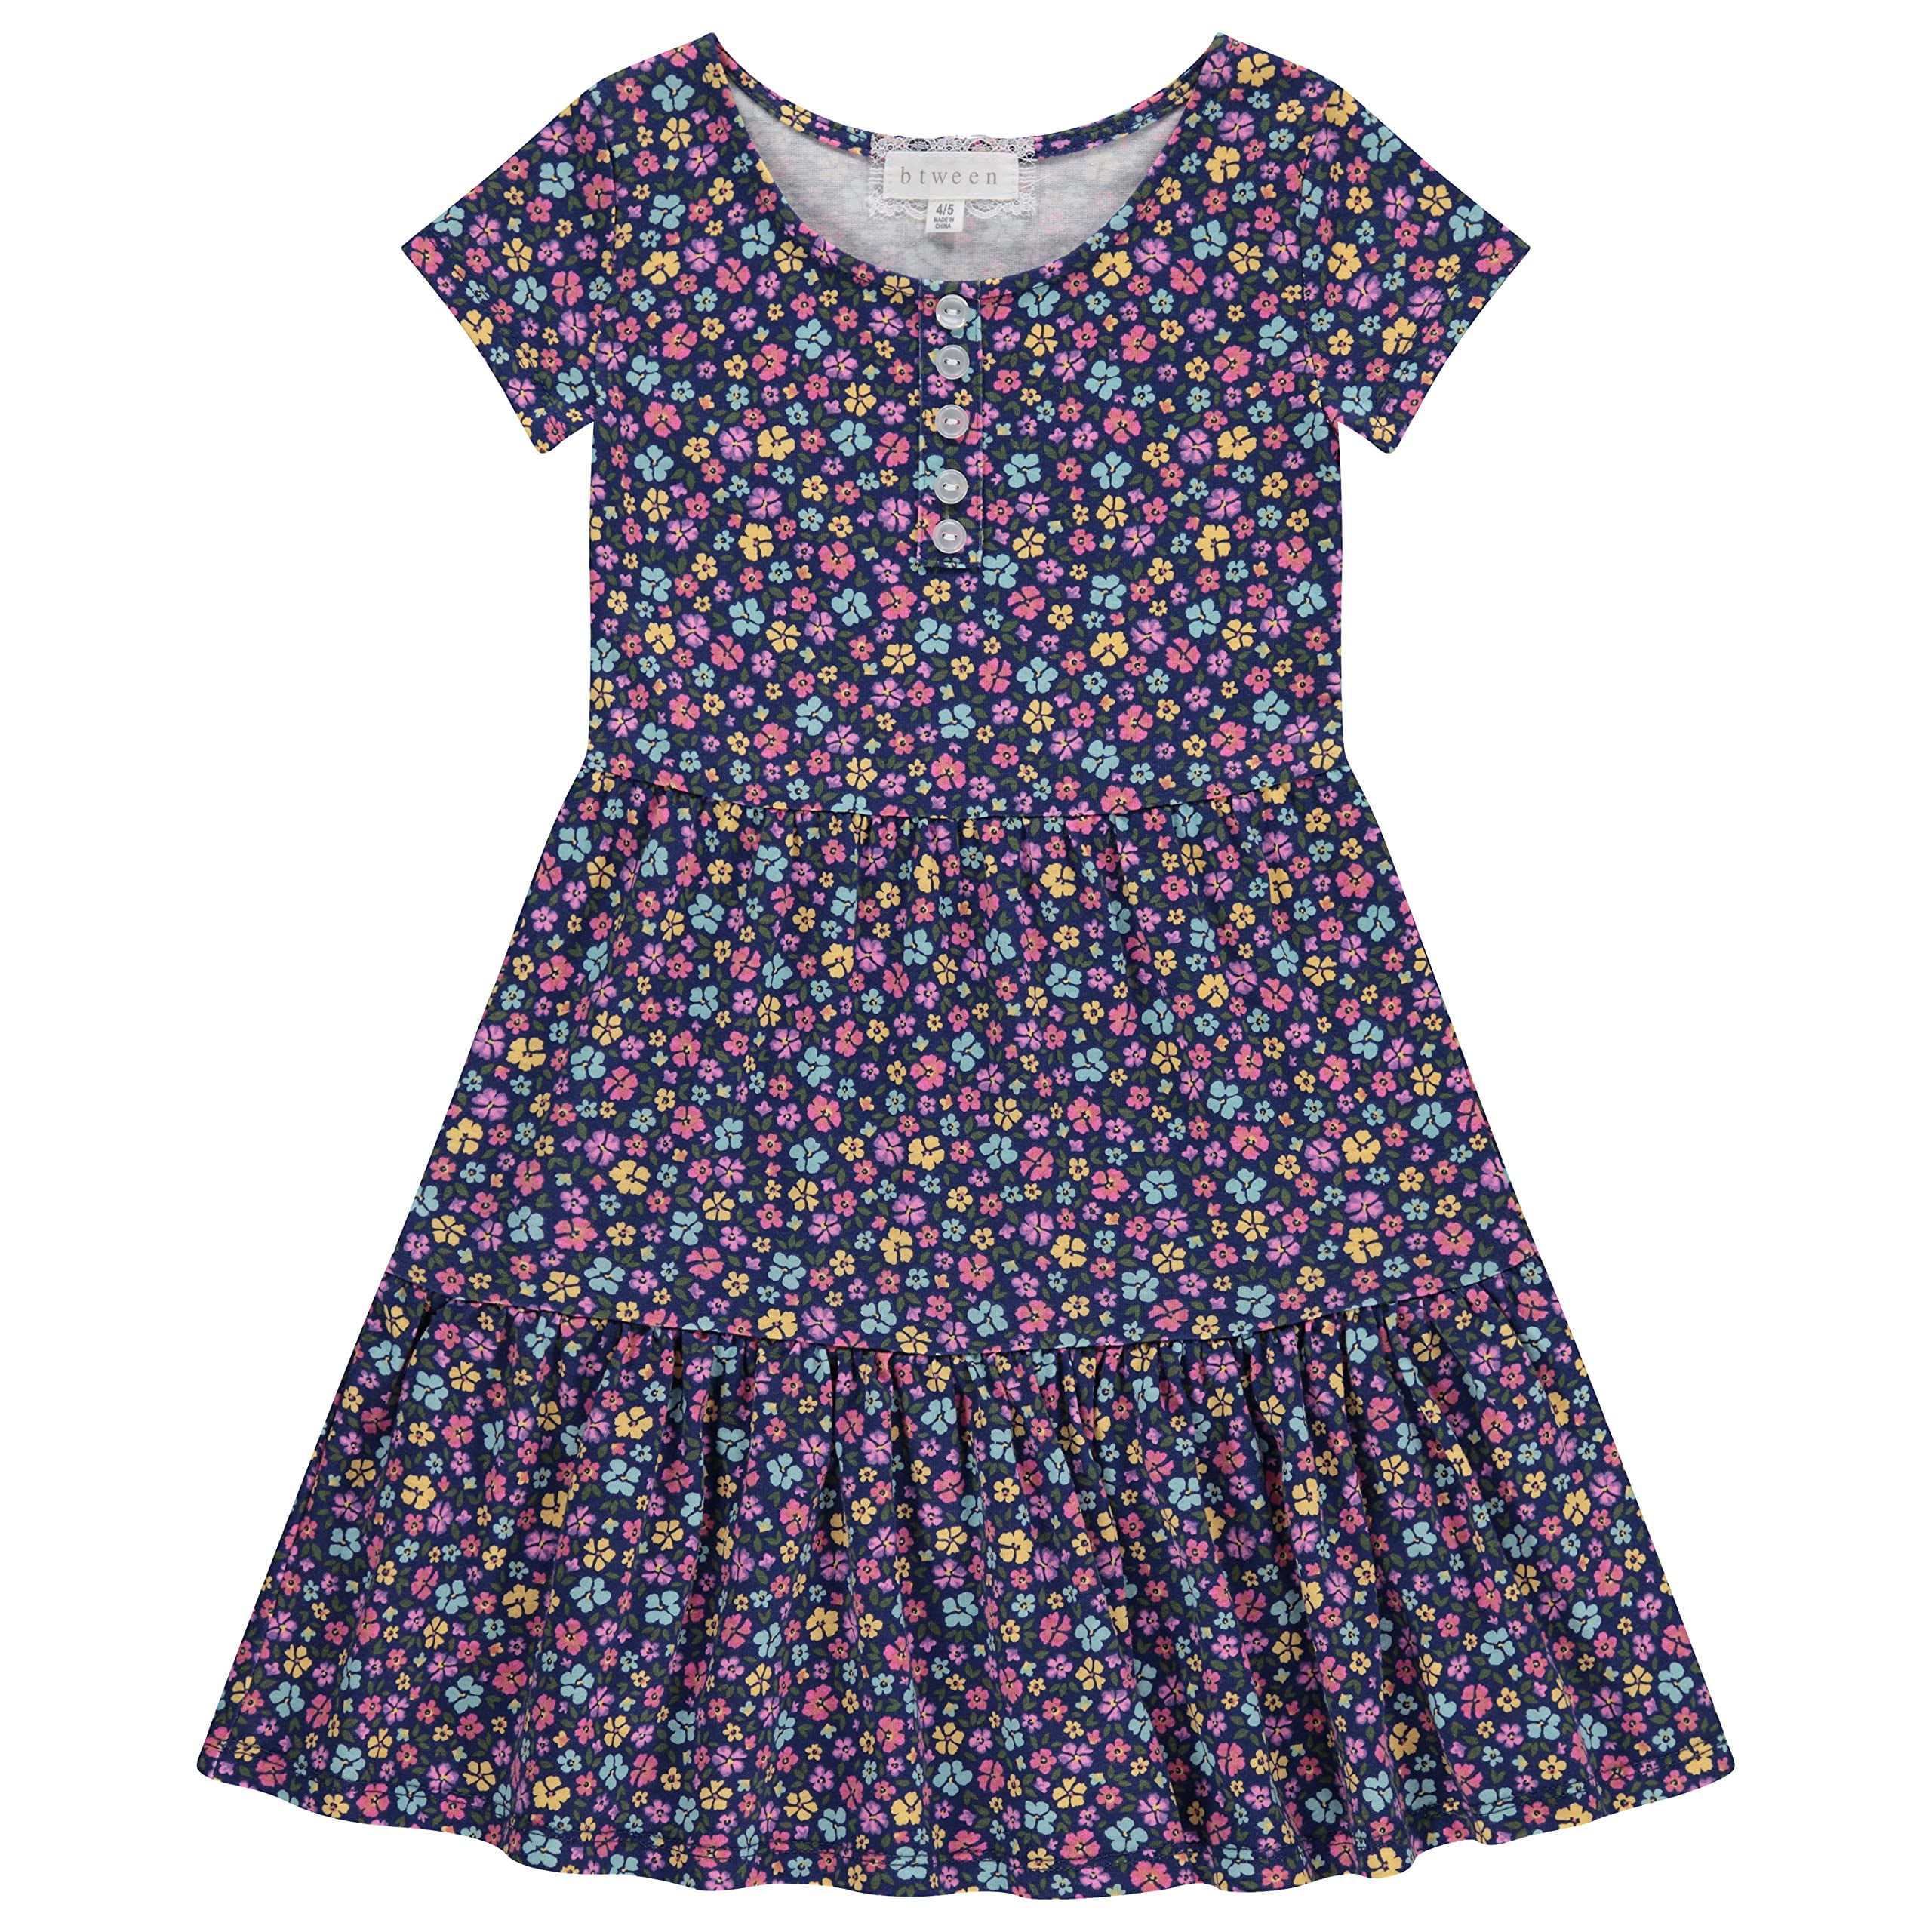 Wereeeeee backkkkk (outtake version) 😅✌🏻 1 dress 3 sizes @F&F Clothi